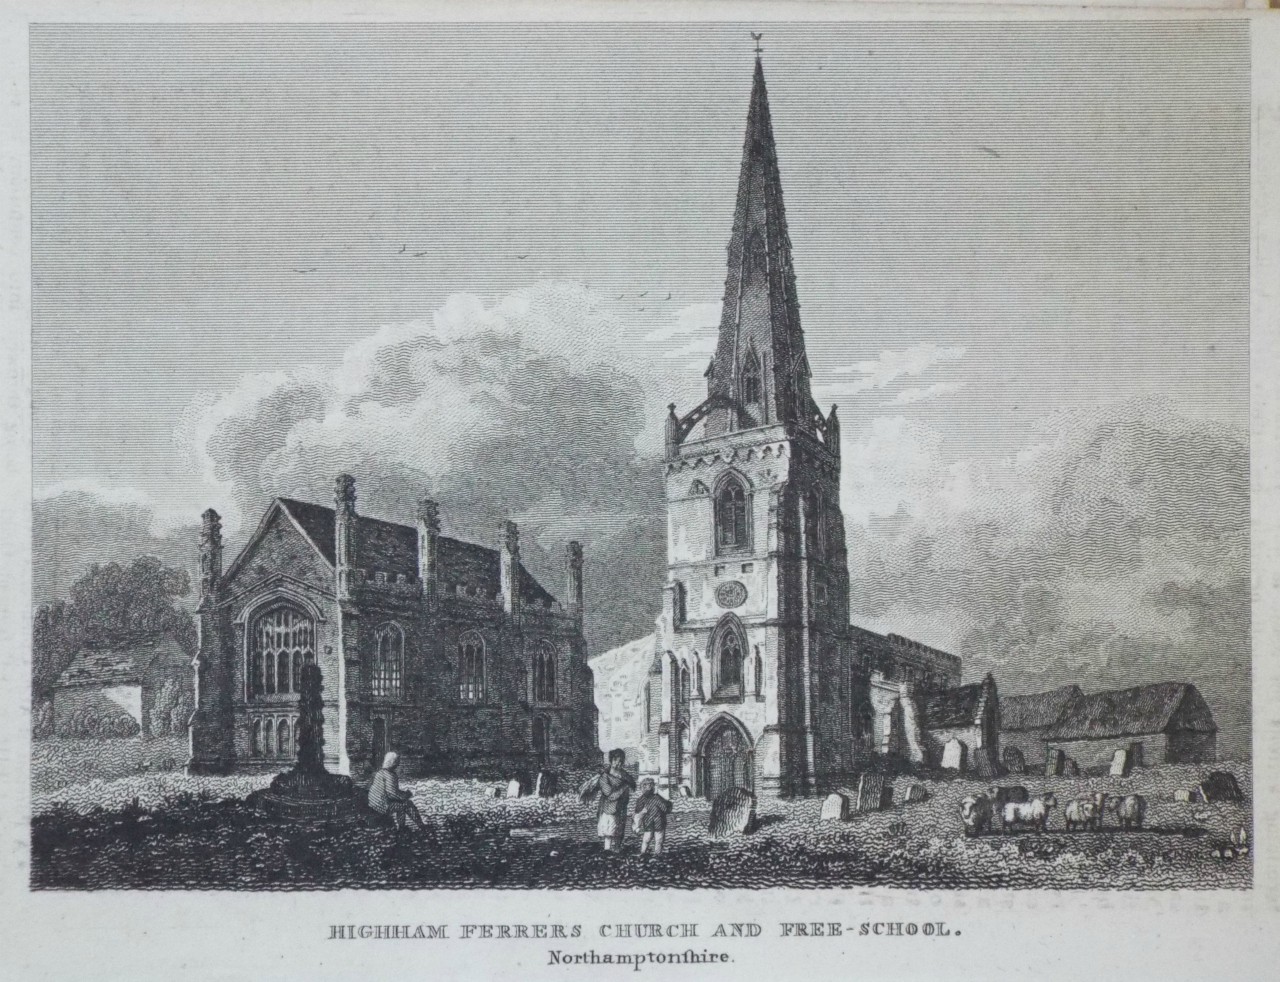 Print - Higham Ferrers Church and Free-School. Northamptonshire.